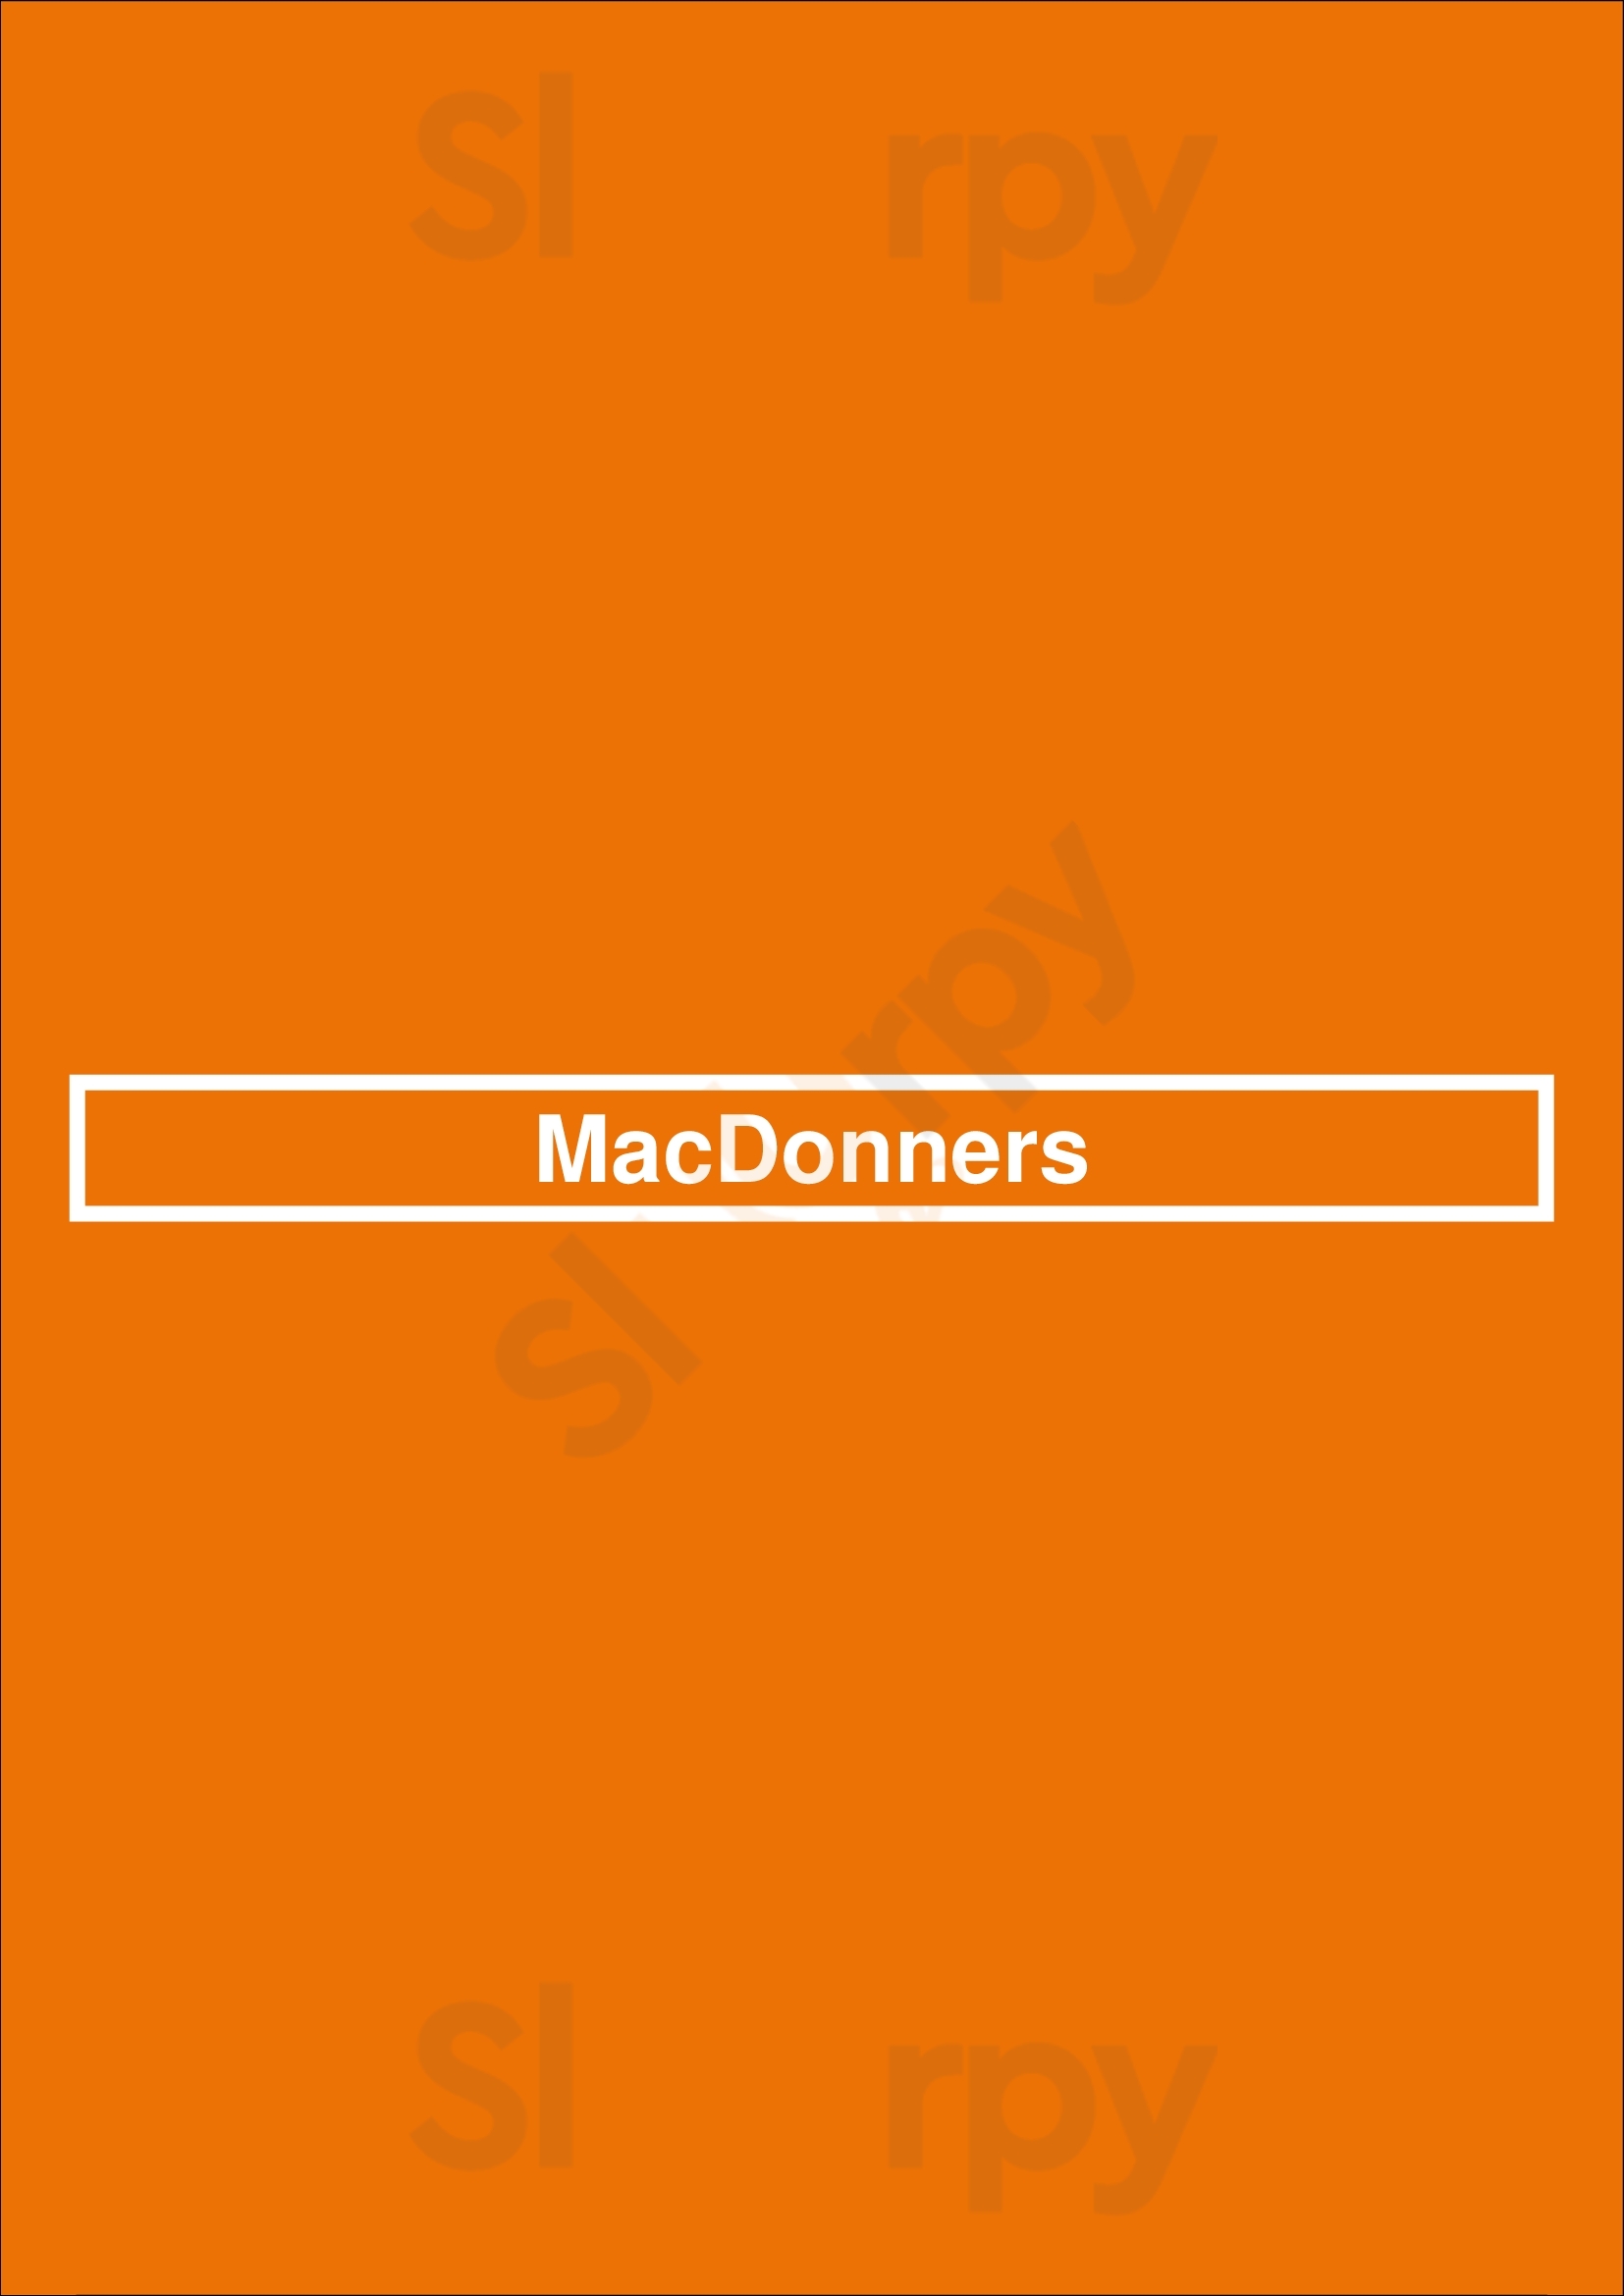 Macdonners Glasgow Menu - 1